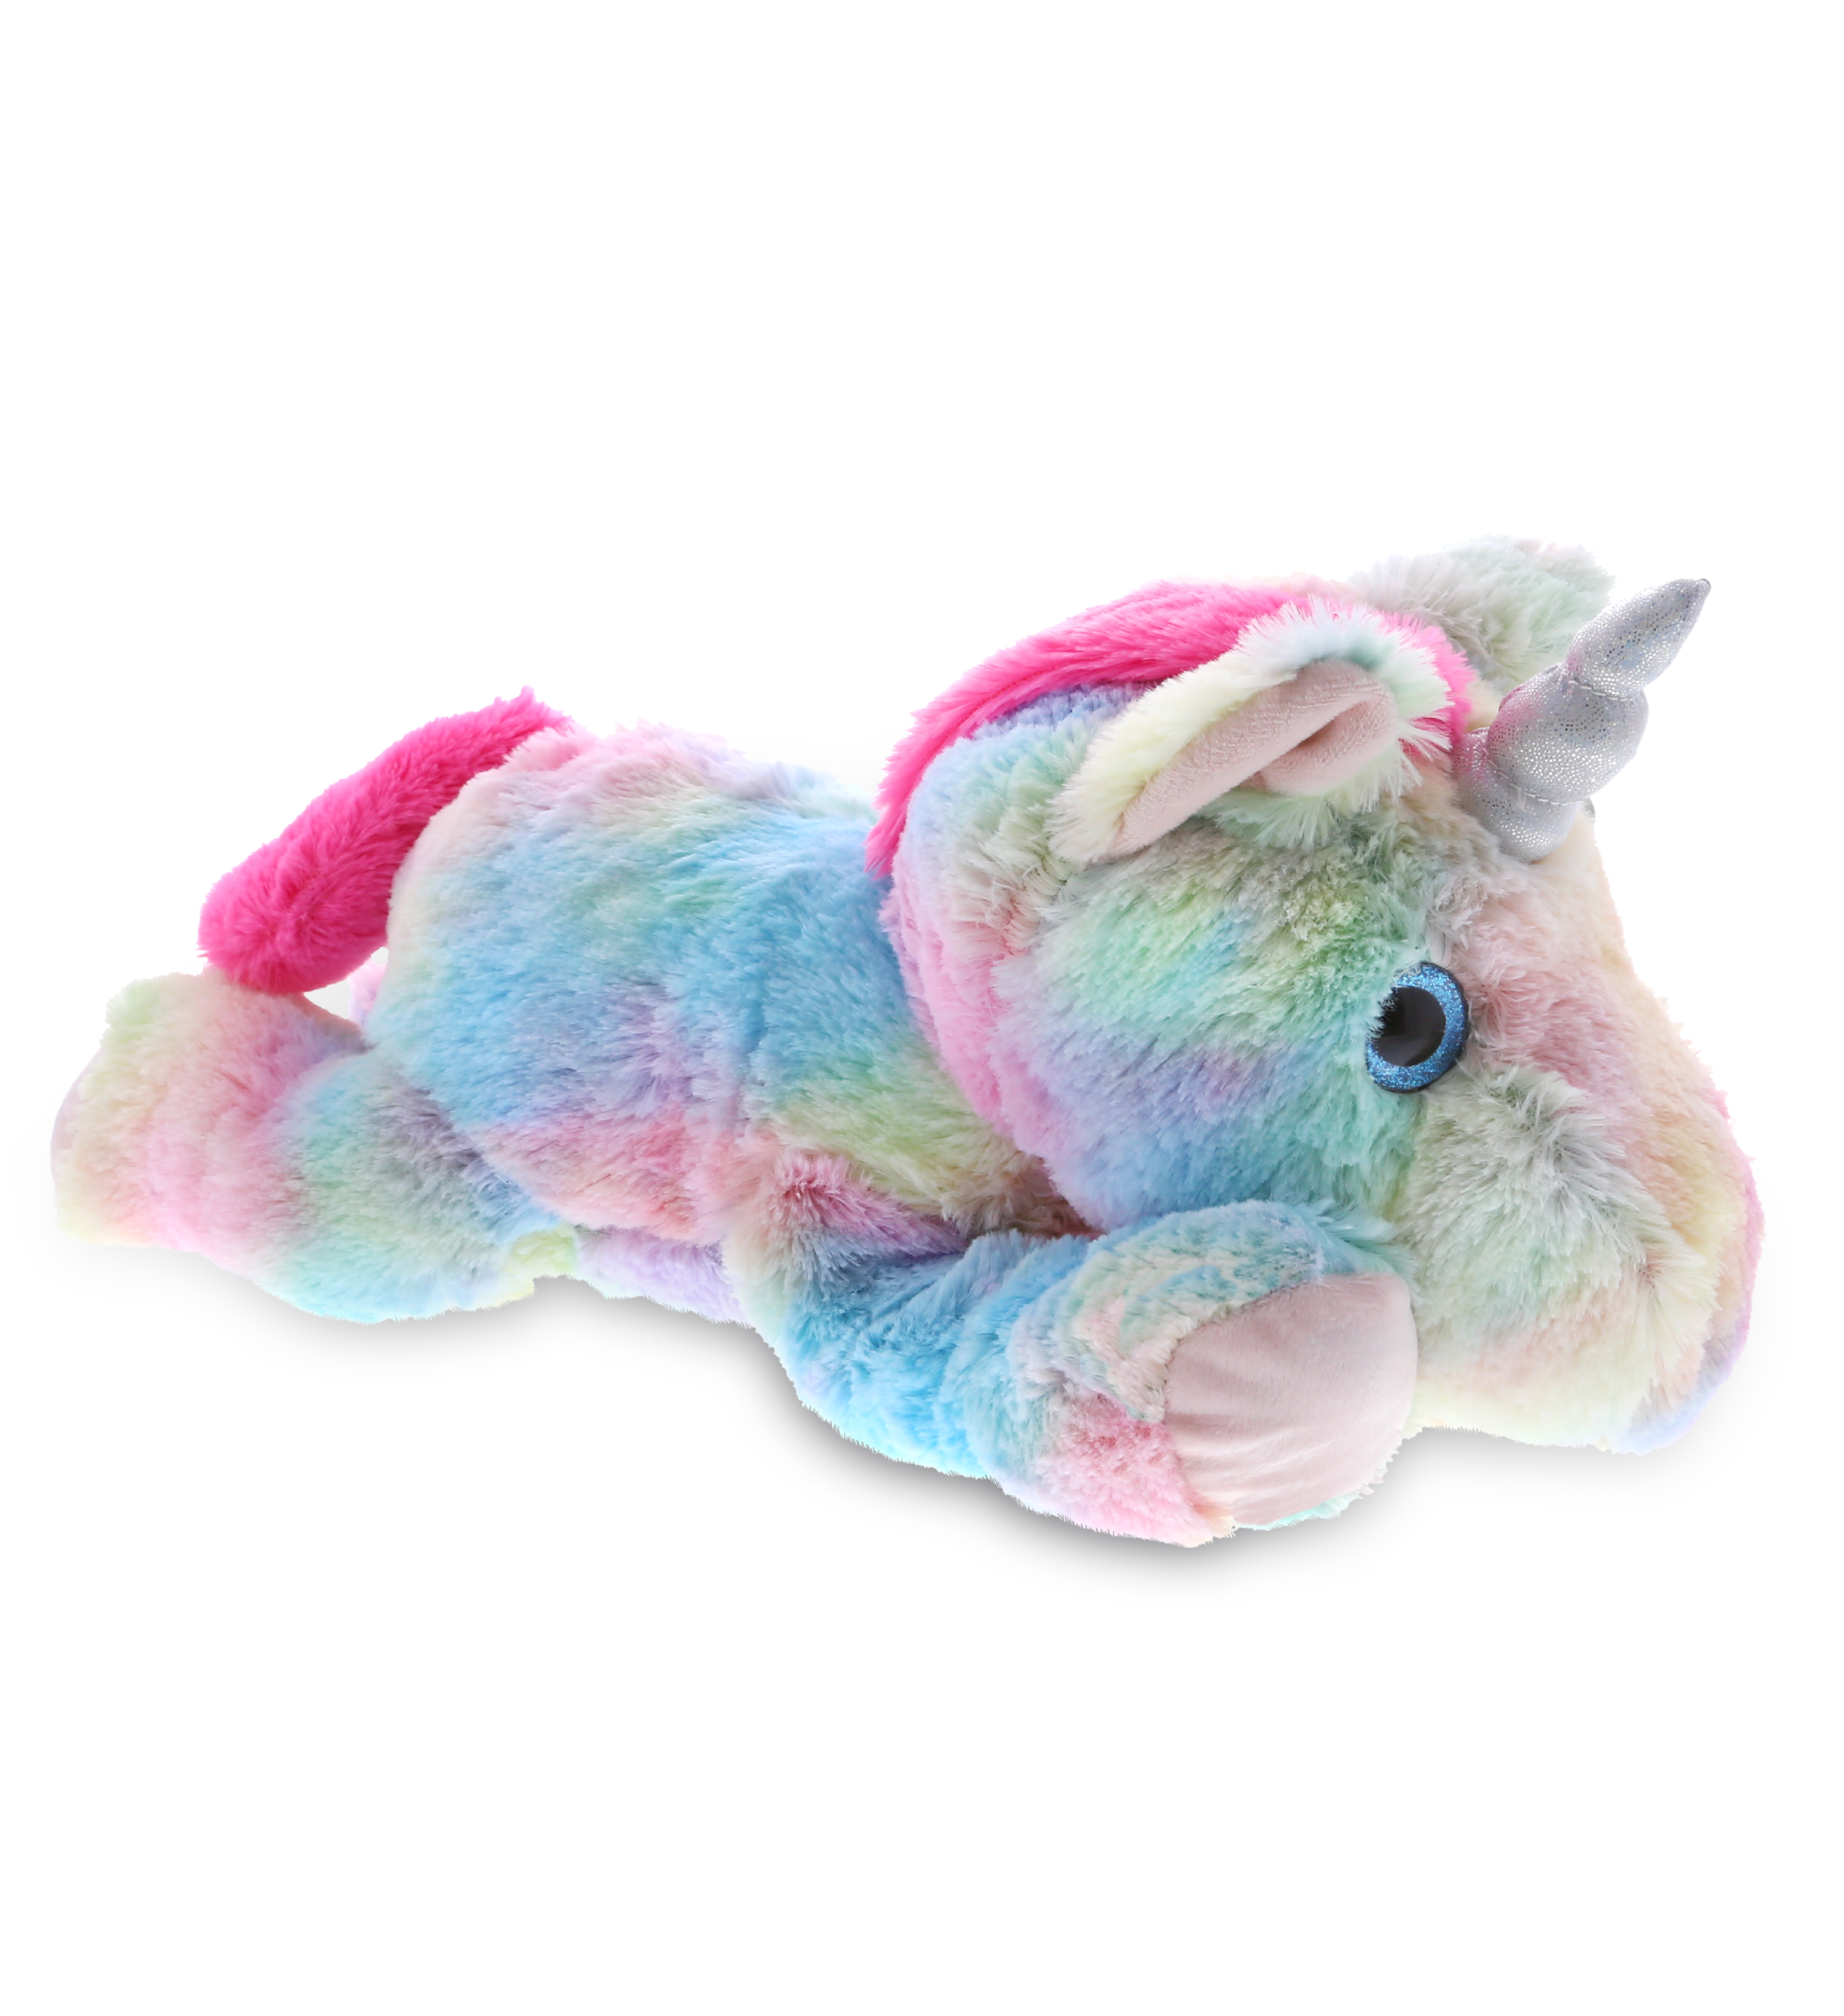 Giant Rainbow Unicorn Stuffed Animal Plush Toy Soft Gift for Kids 